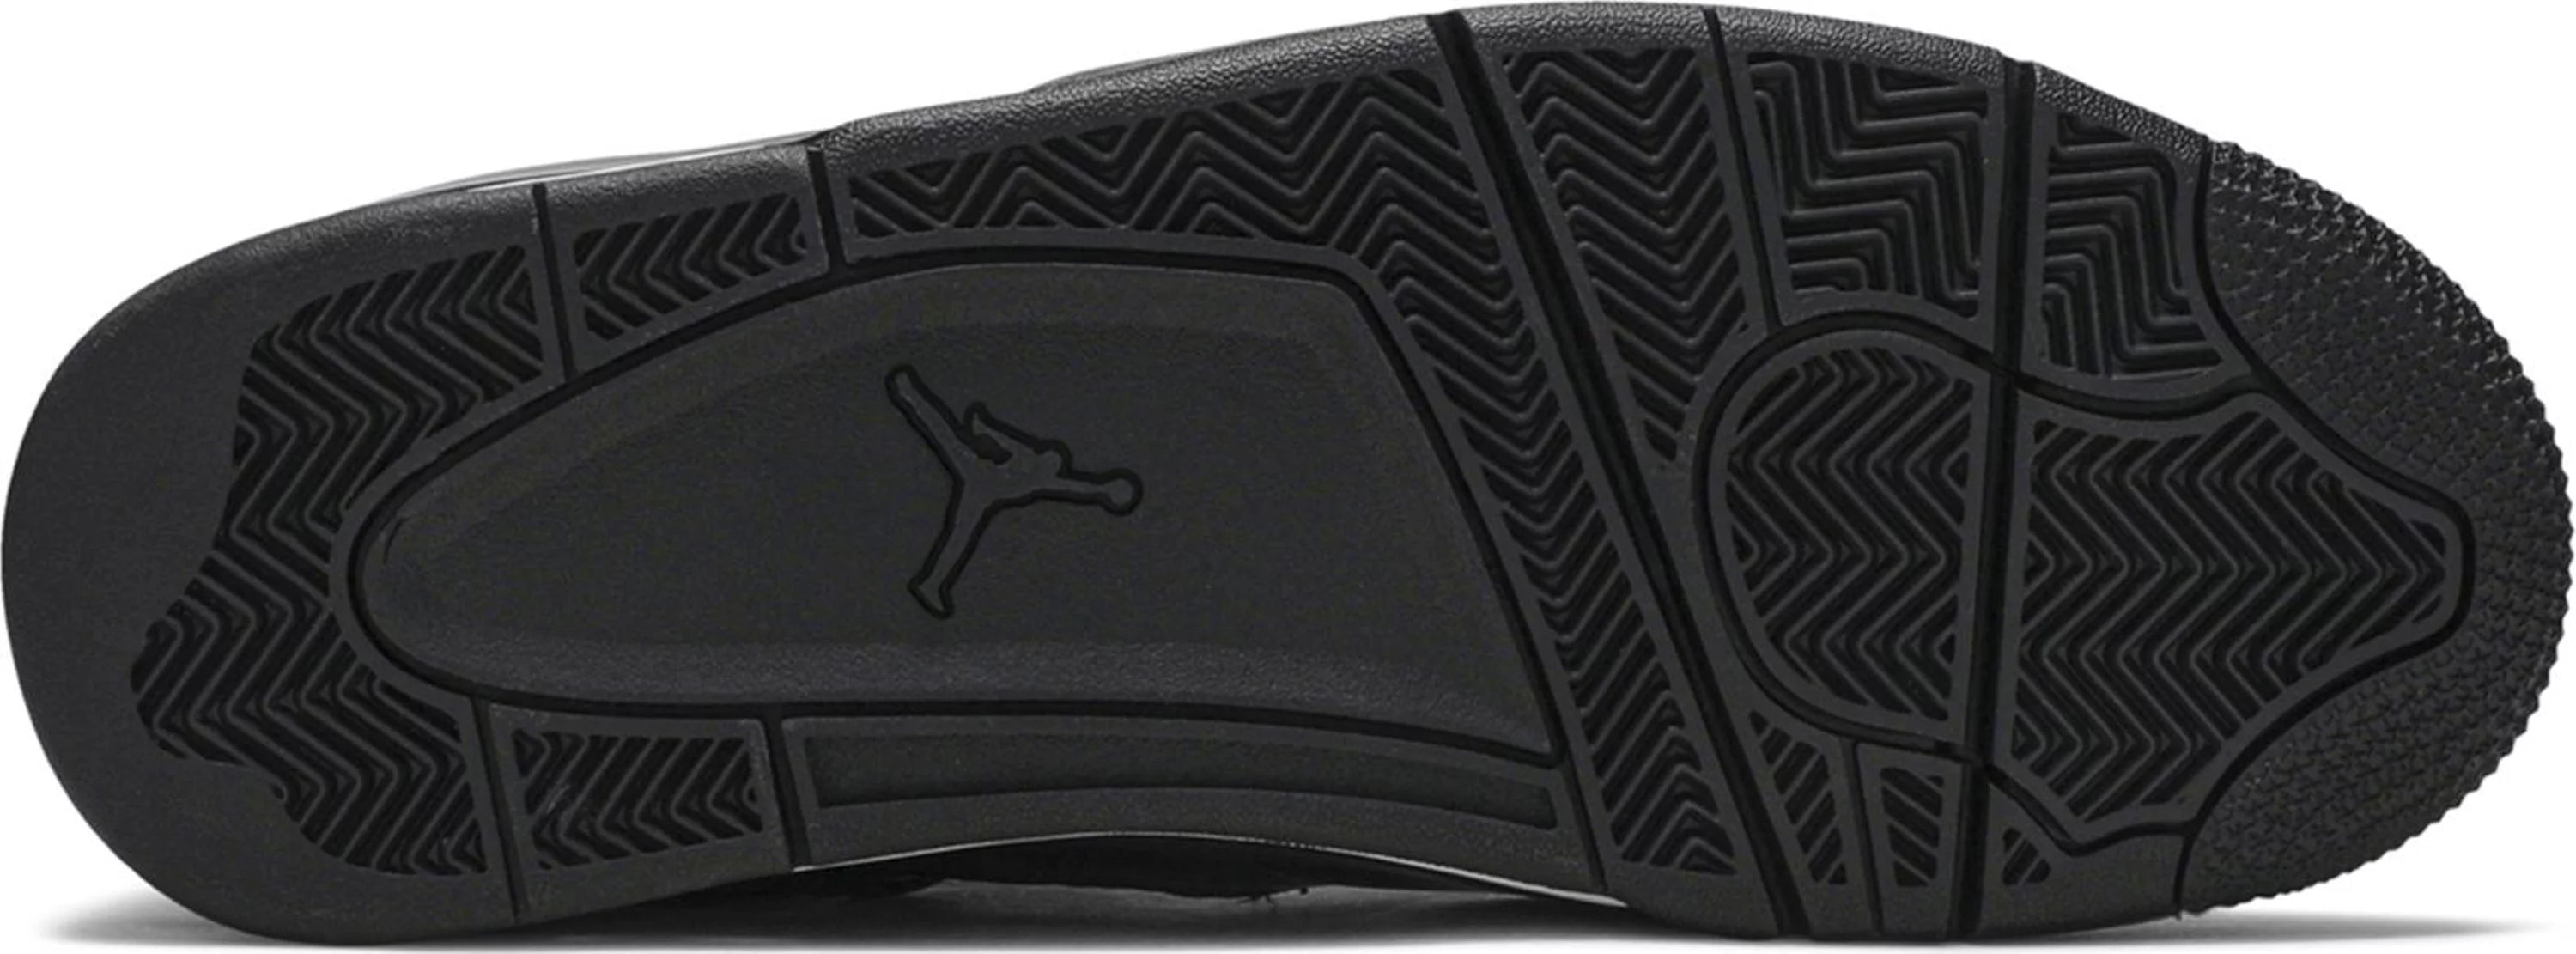 Air Jordan 4 Retro 11Lab4 Black